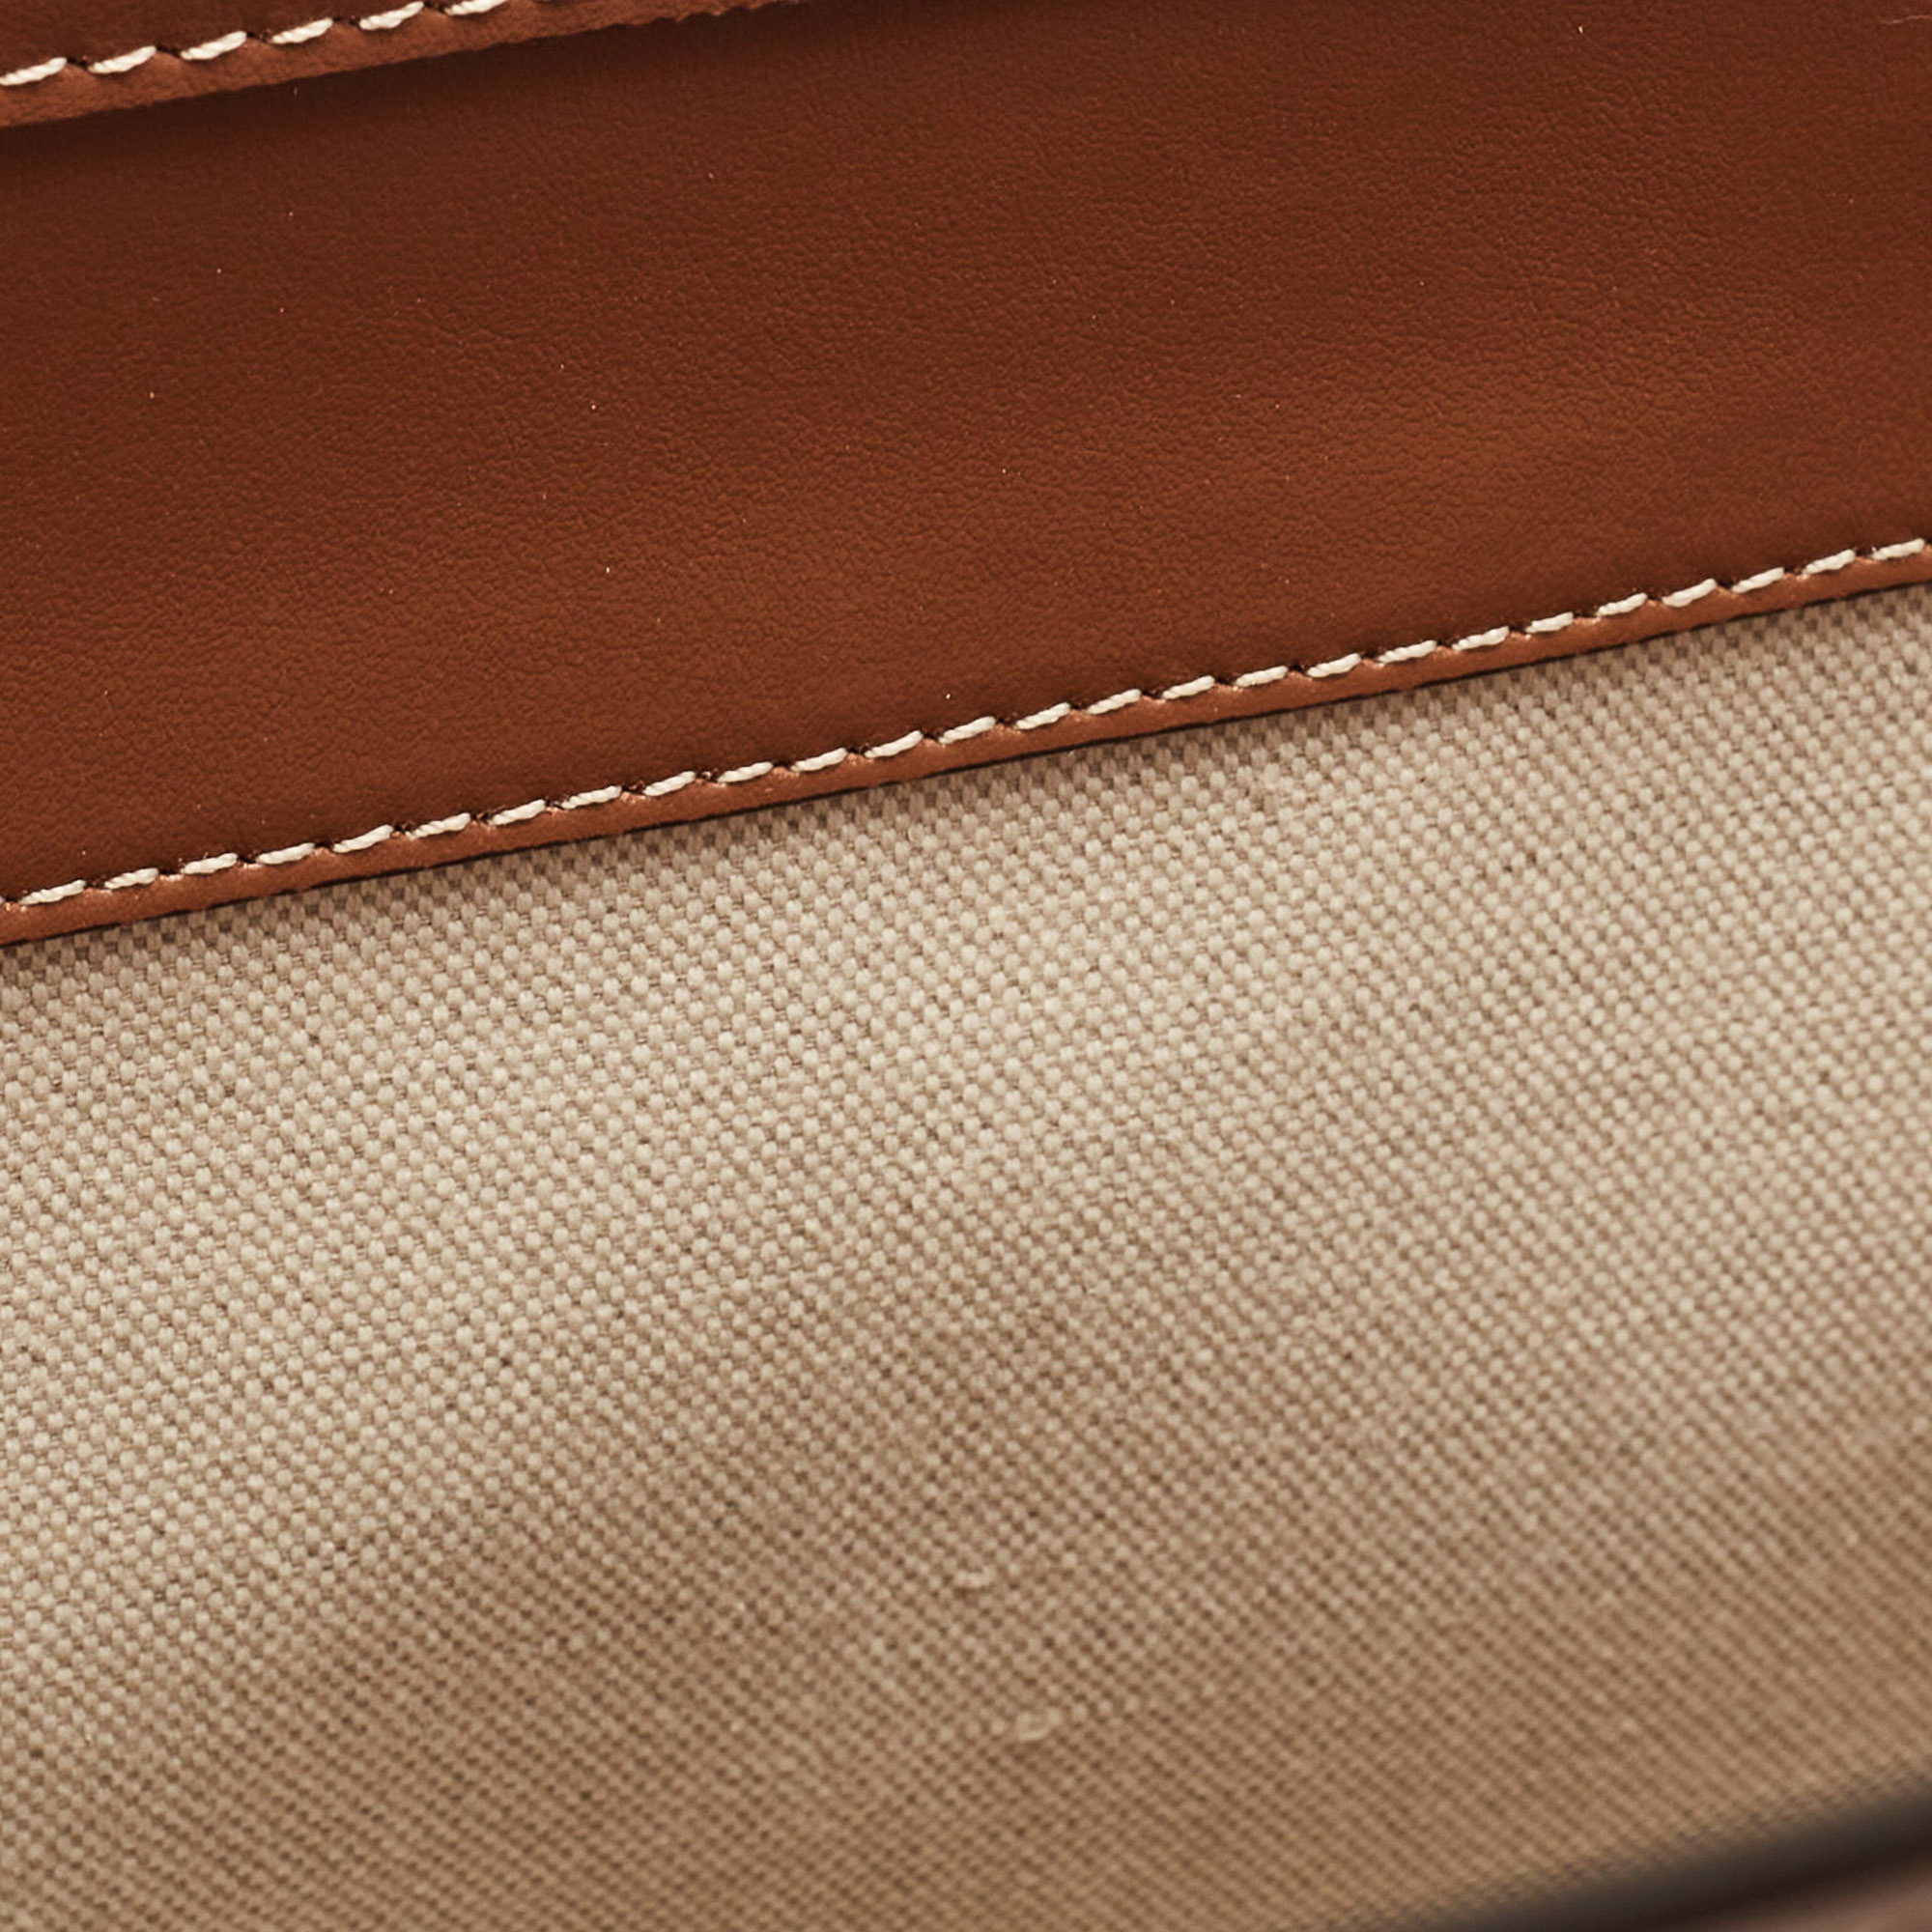 Burberry Tan/Beige Canvas And Leather Medium Pocket Bag